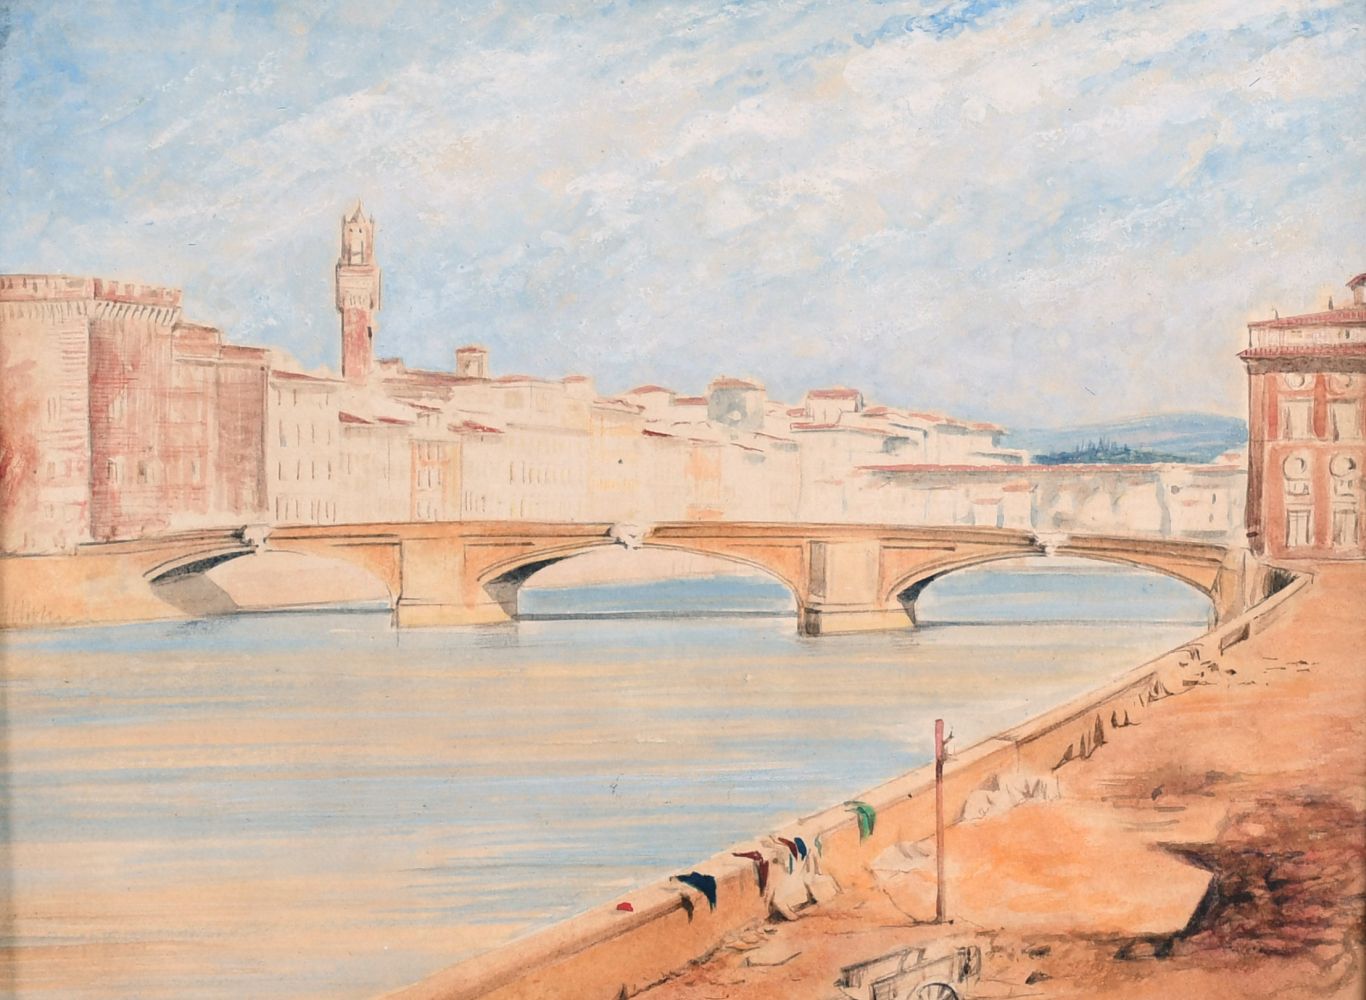 Calvert jones (1804-1877) British, "View on the Arno in Florence Showing the Ponte Santa Trinita